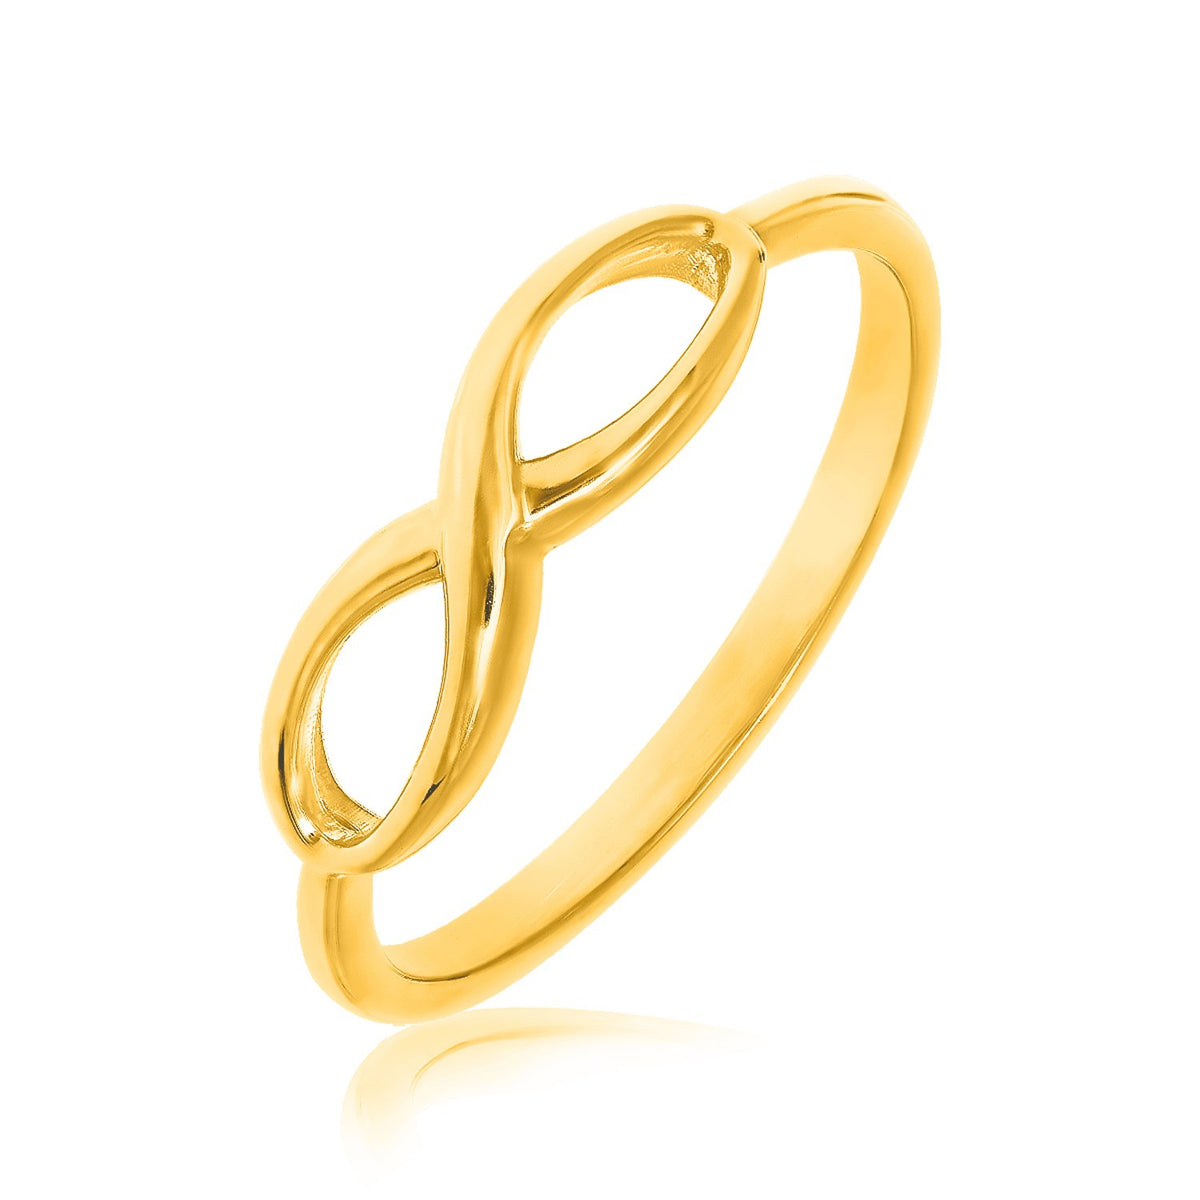 Infinity Ring in High Polish - 14k Yellow Gold